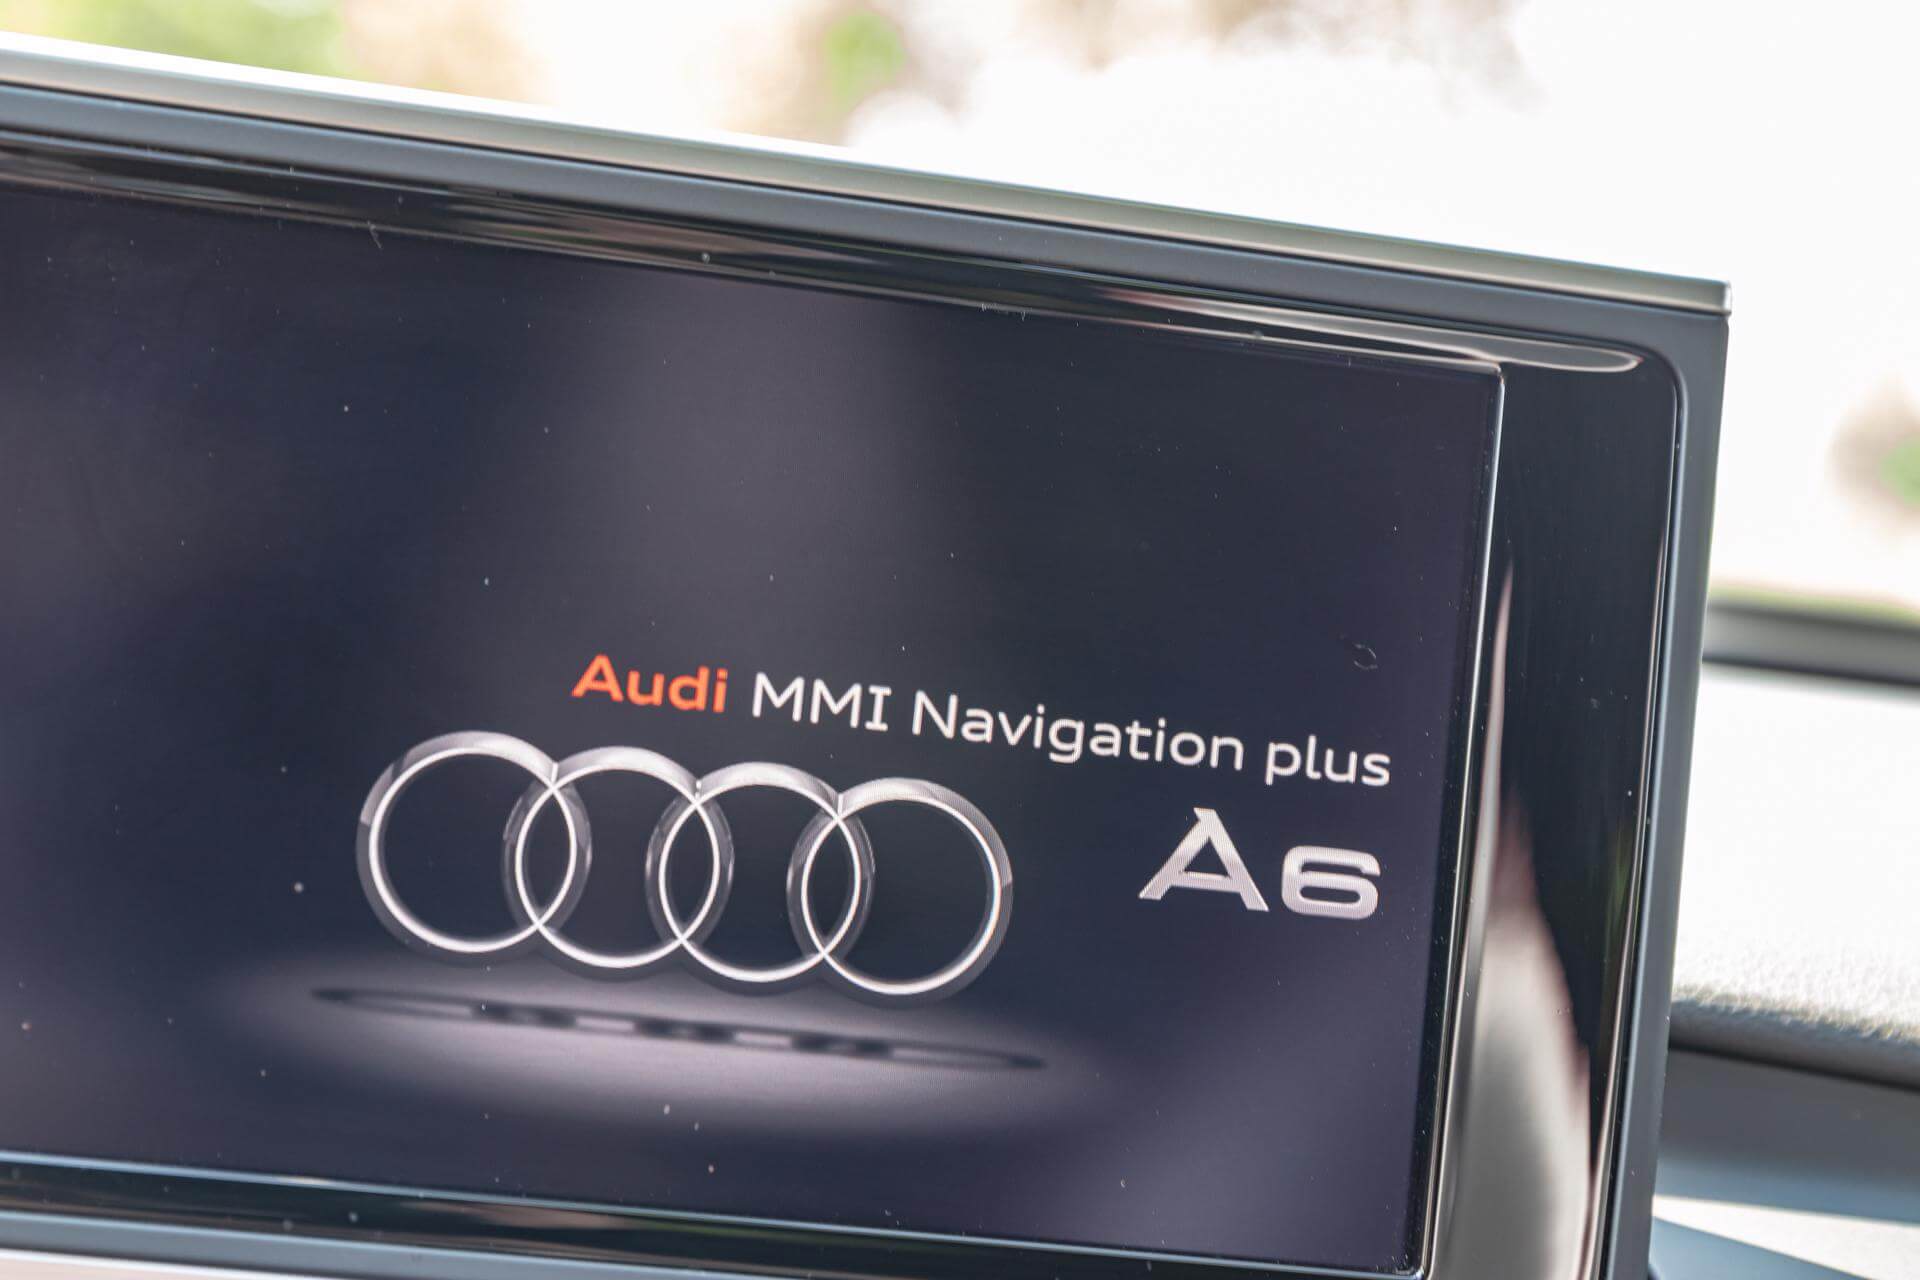 Real Art on Wheels | 2016 Audi A6 Avant